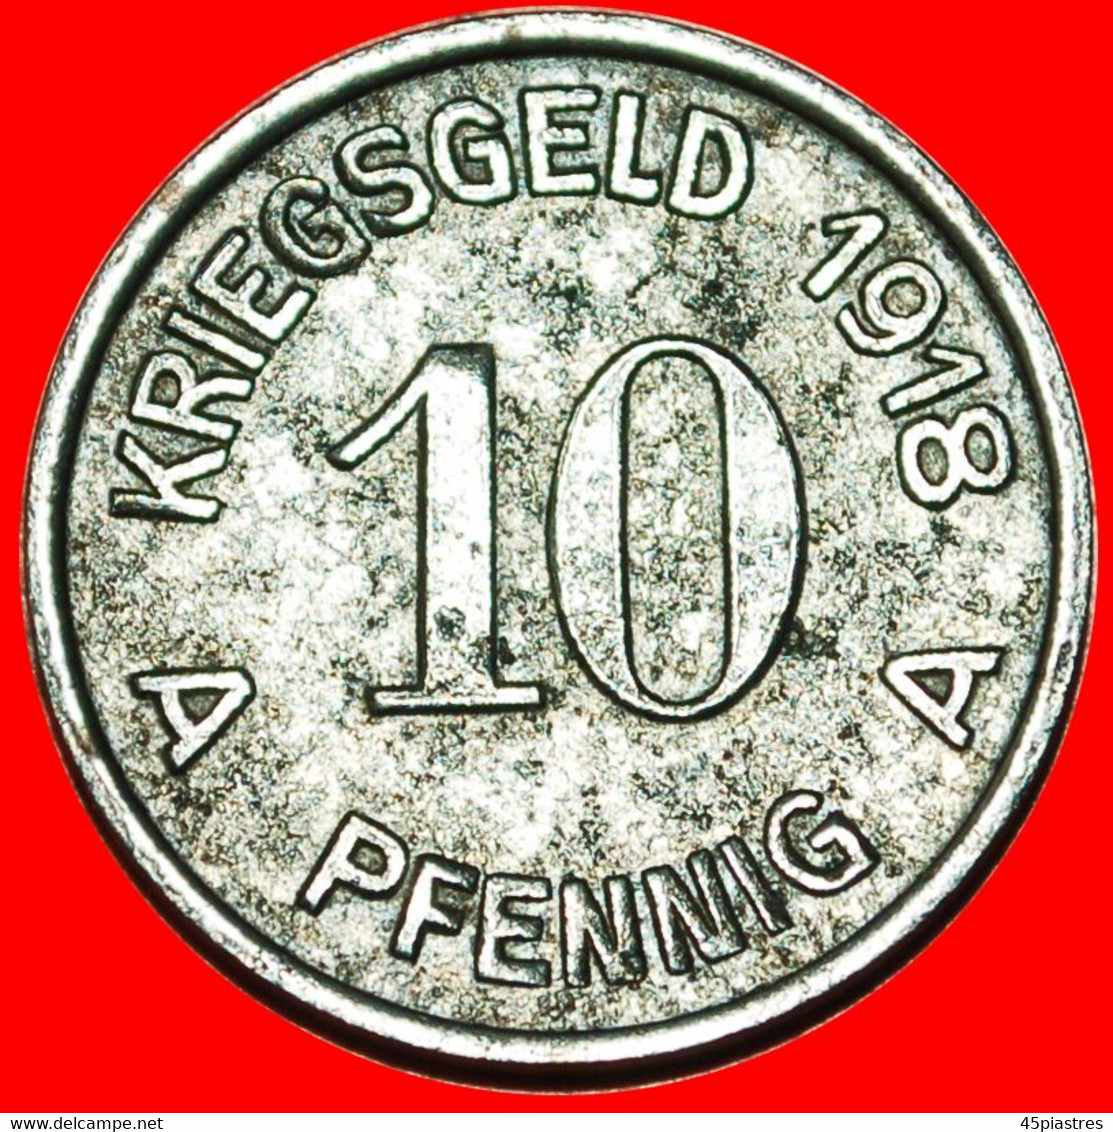 * HAND GRENADE WESTPHALIA: GERMANY LUEDENSCHEID ★ 10 PFENNIGS 1918! TO BE PUBLISHED! LOW START! ★ NO RESERVE! - Monetary/Of Necessity